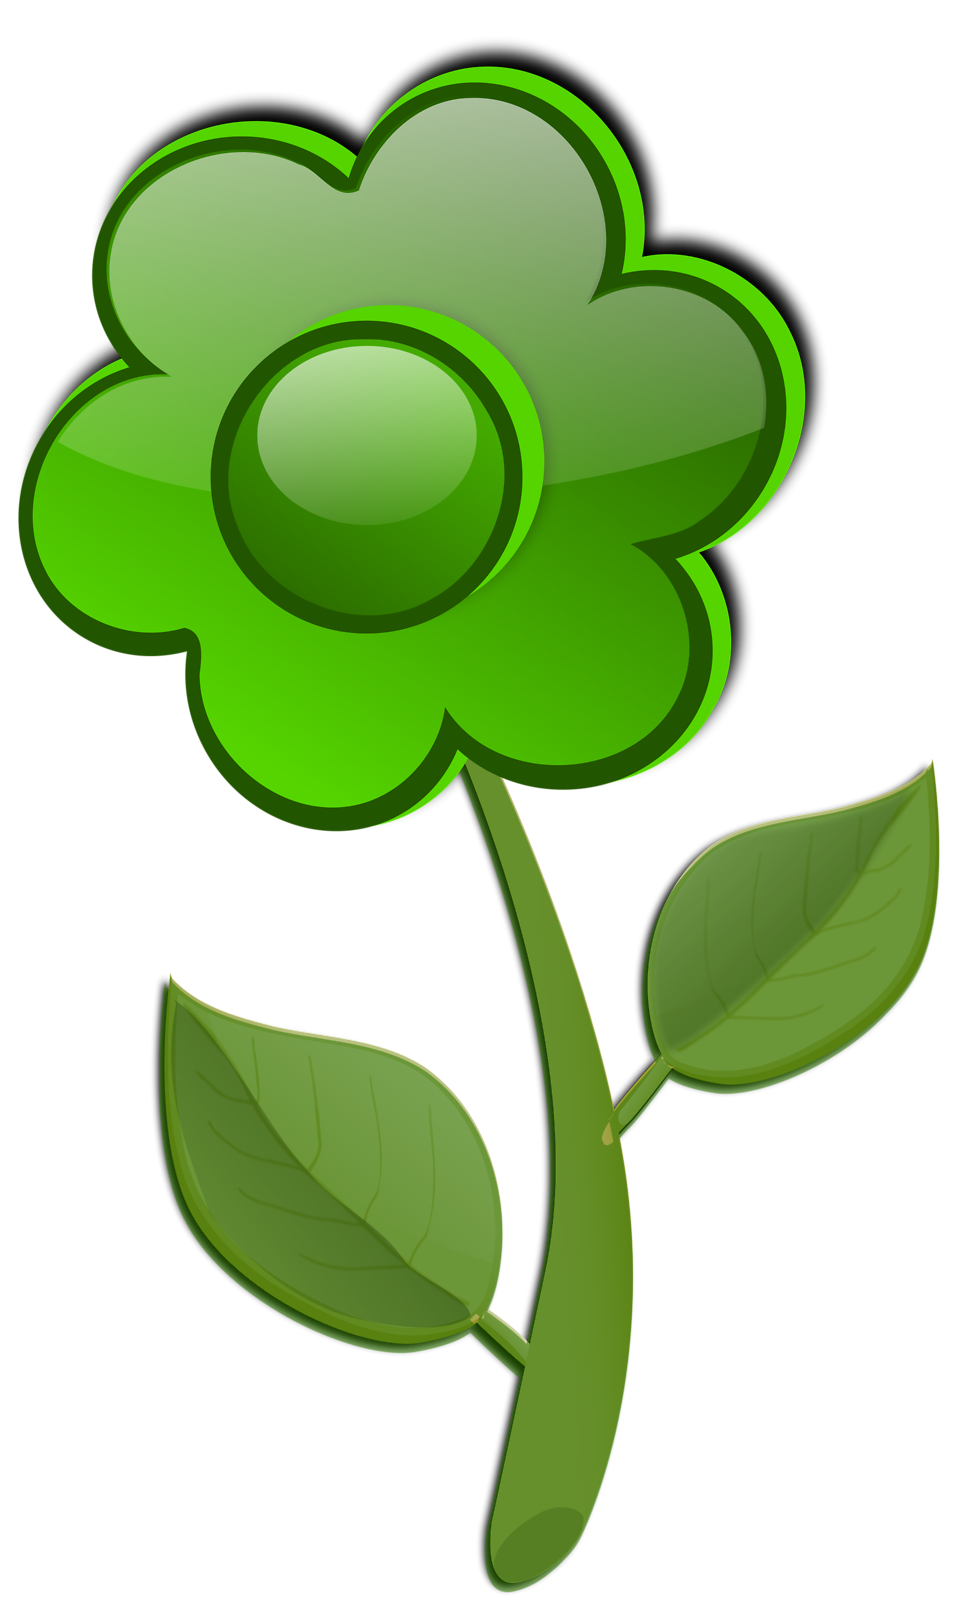 green plant clip art - photo #37